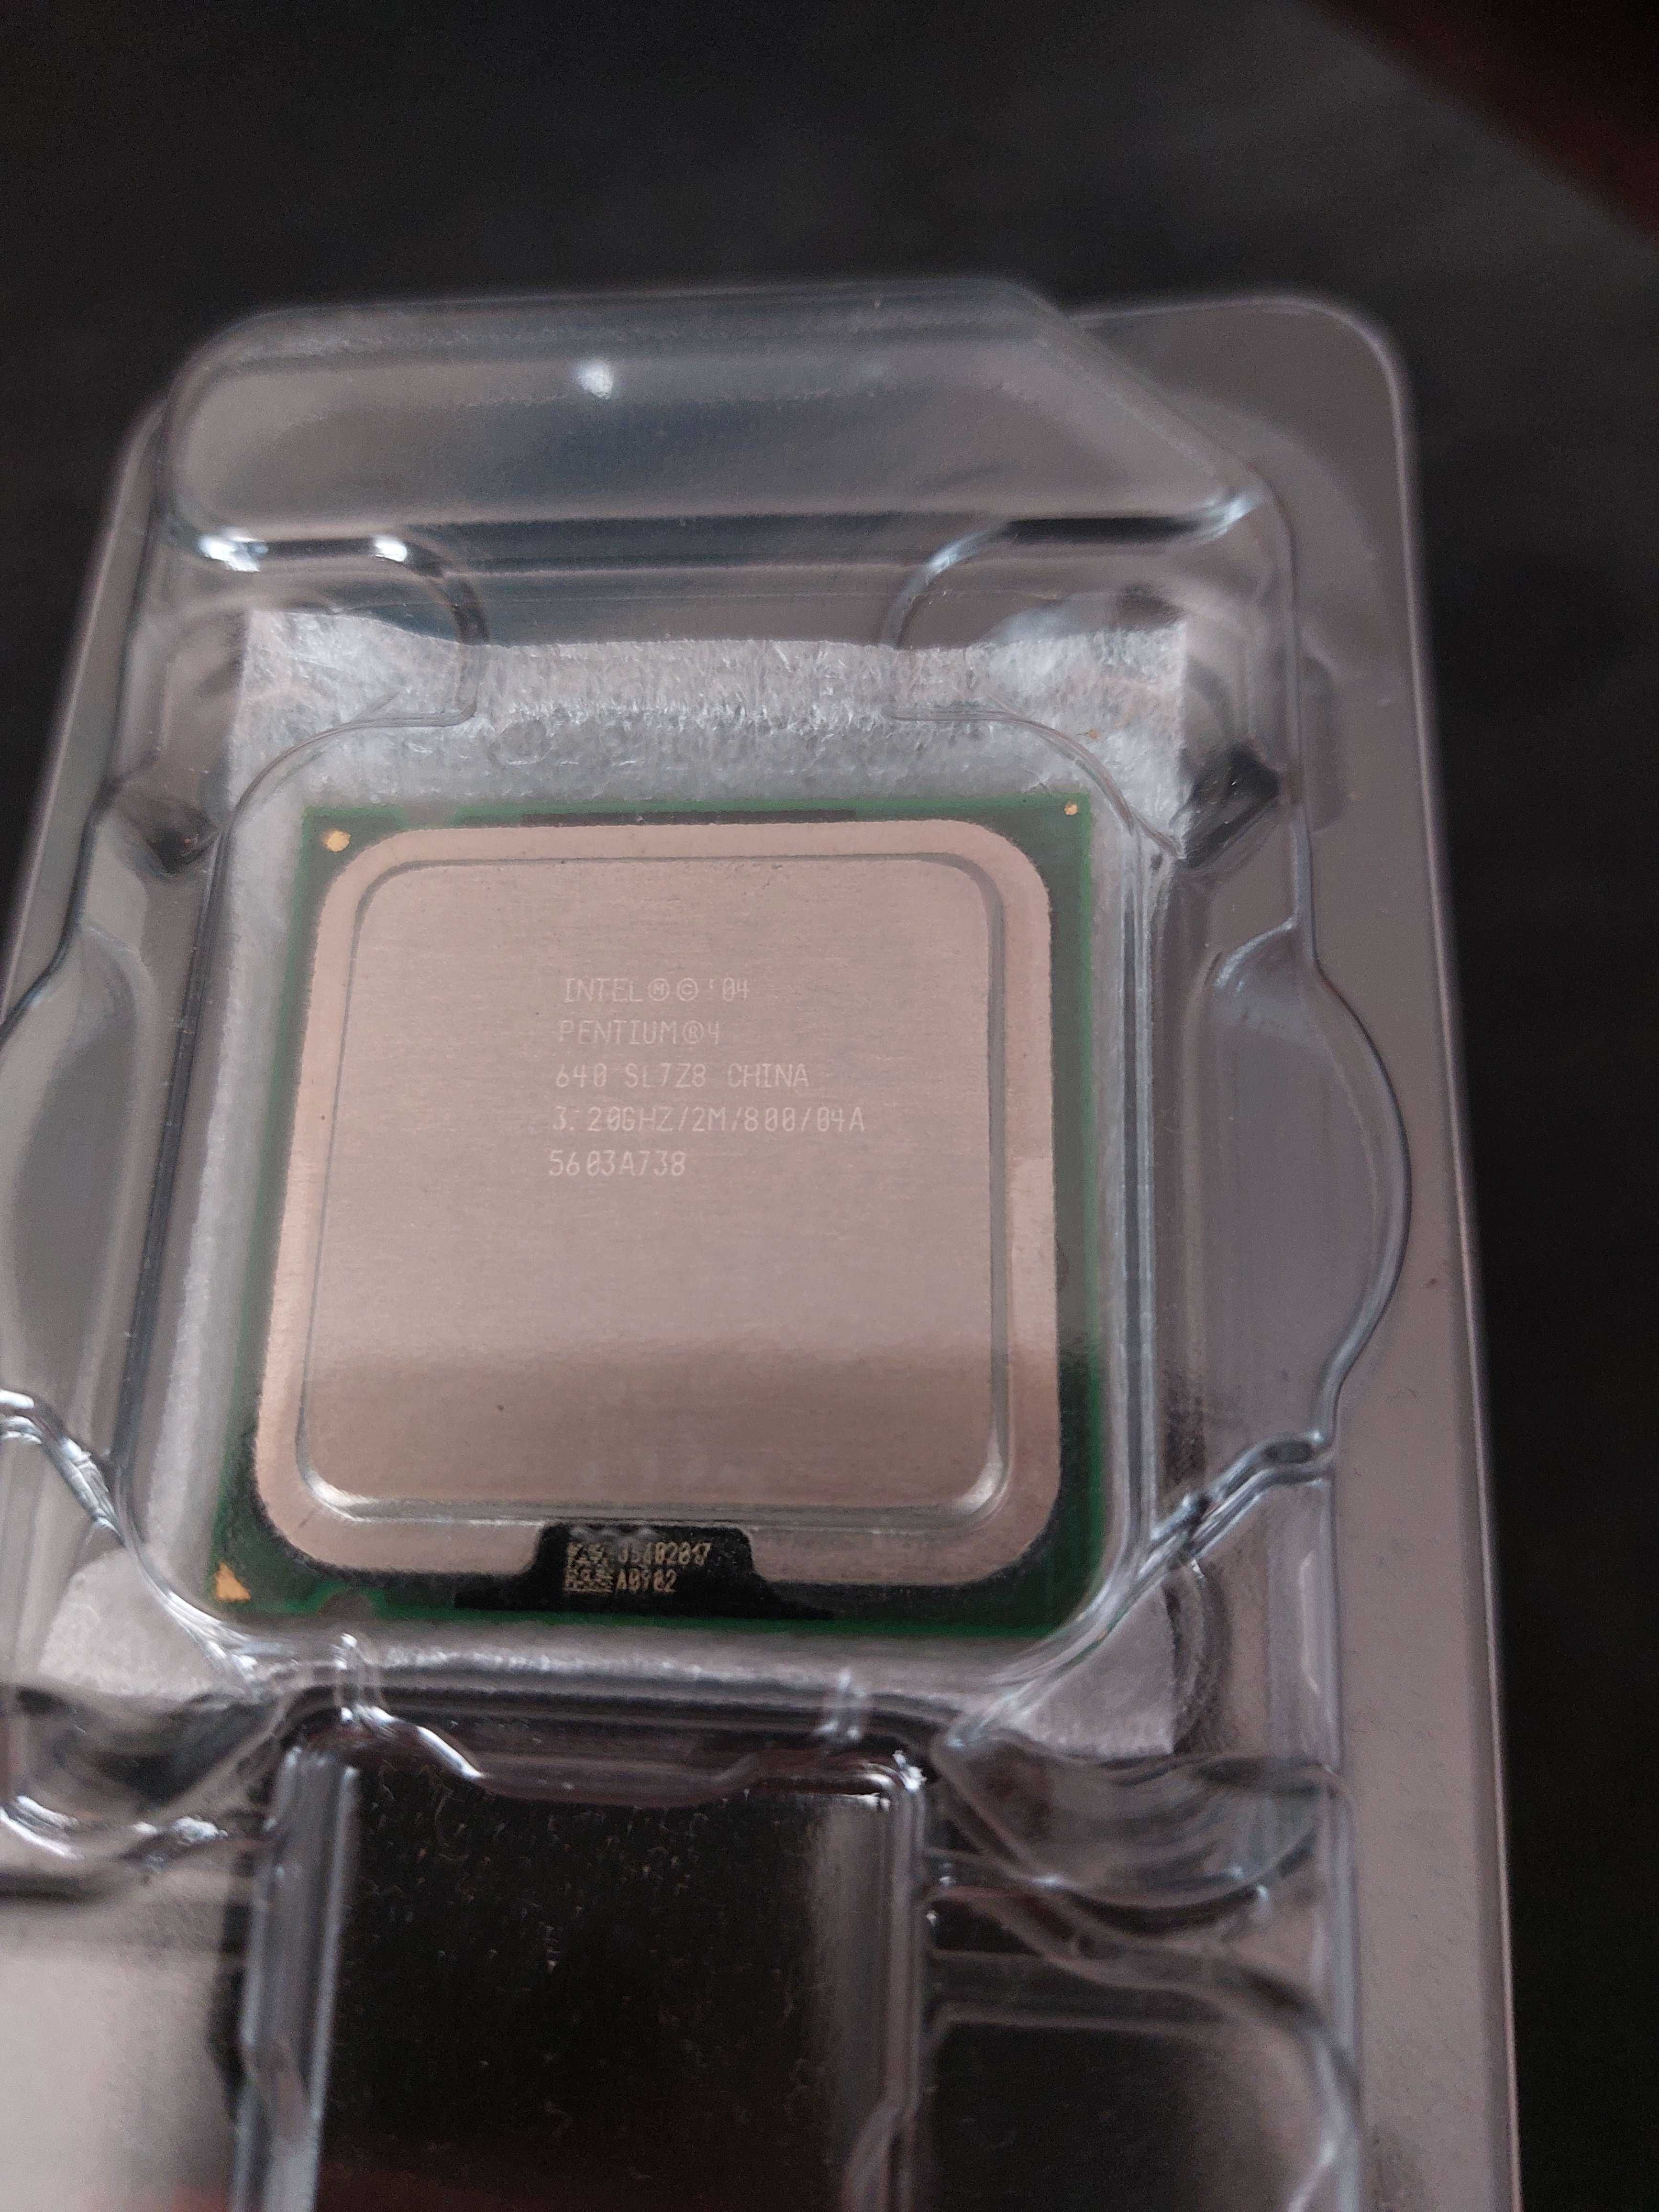 Processador Pentium 4 640 sl7z8 3.2ghz